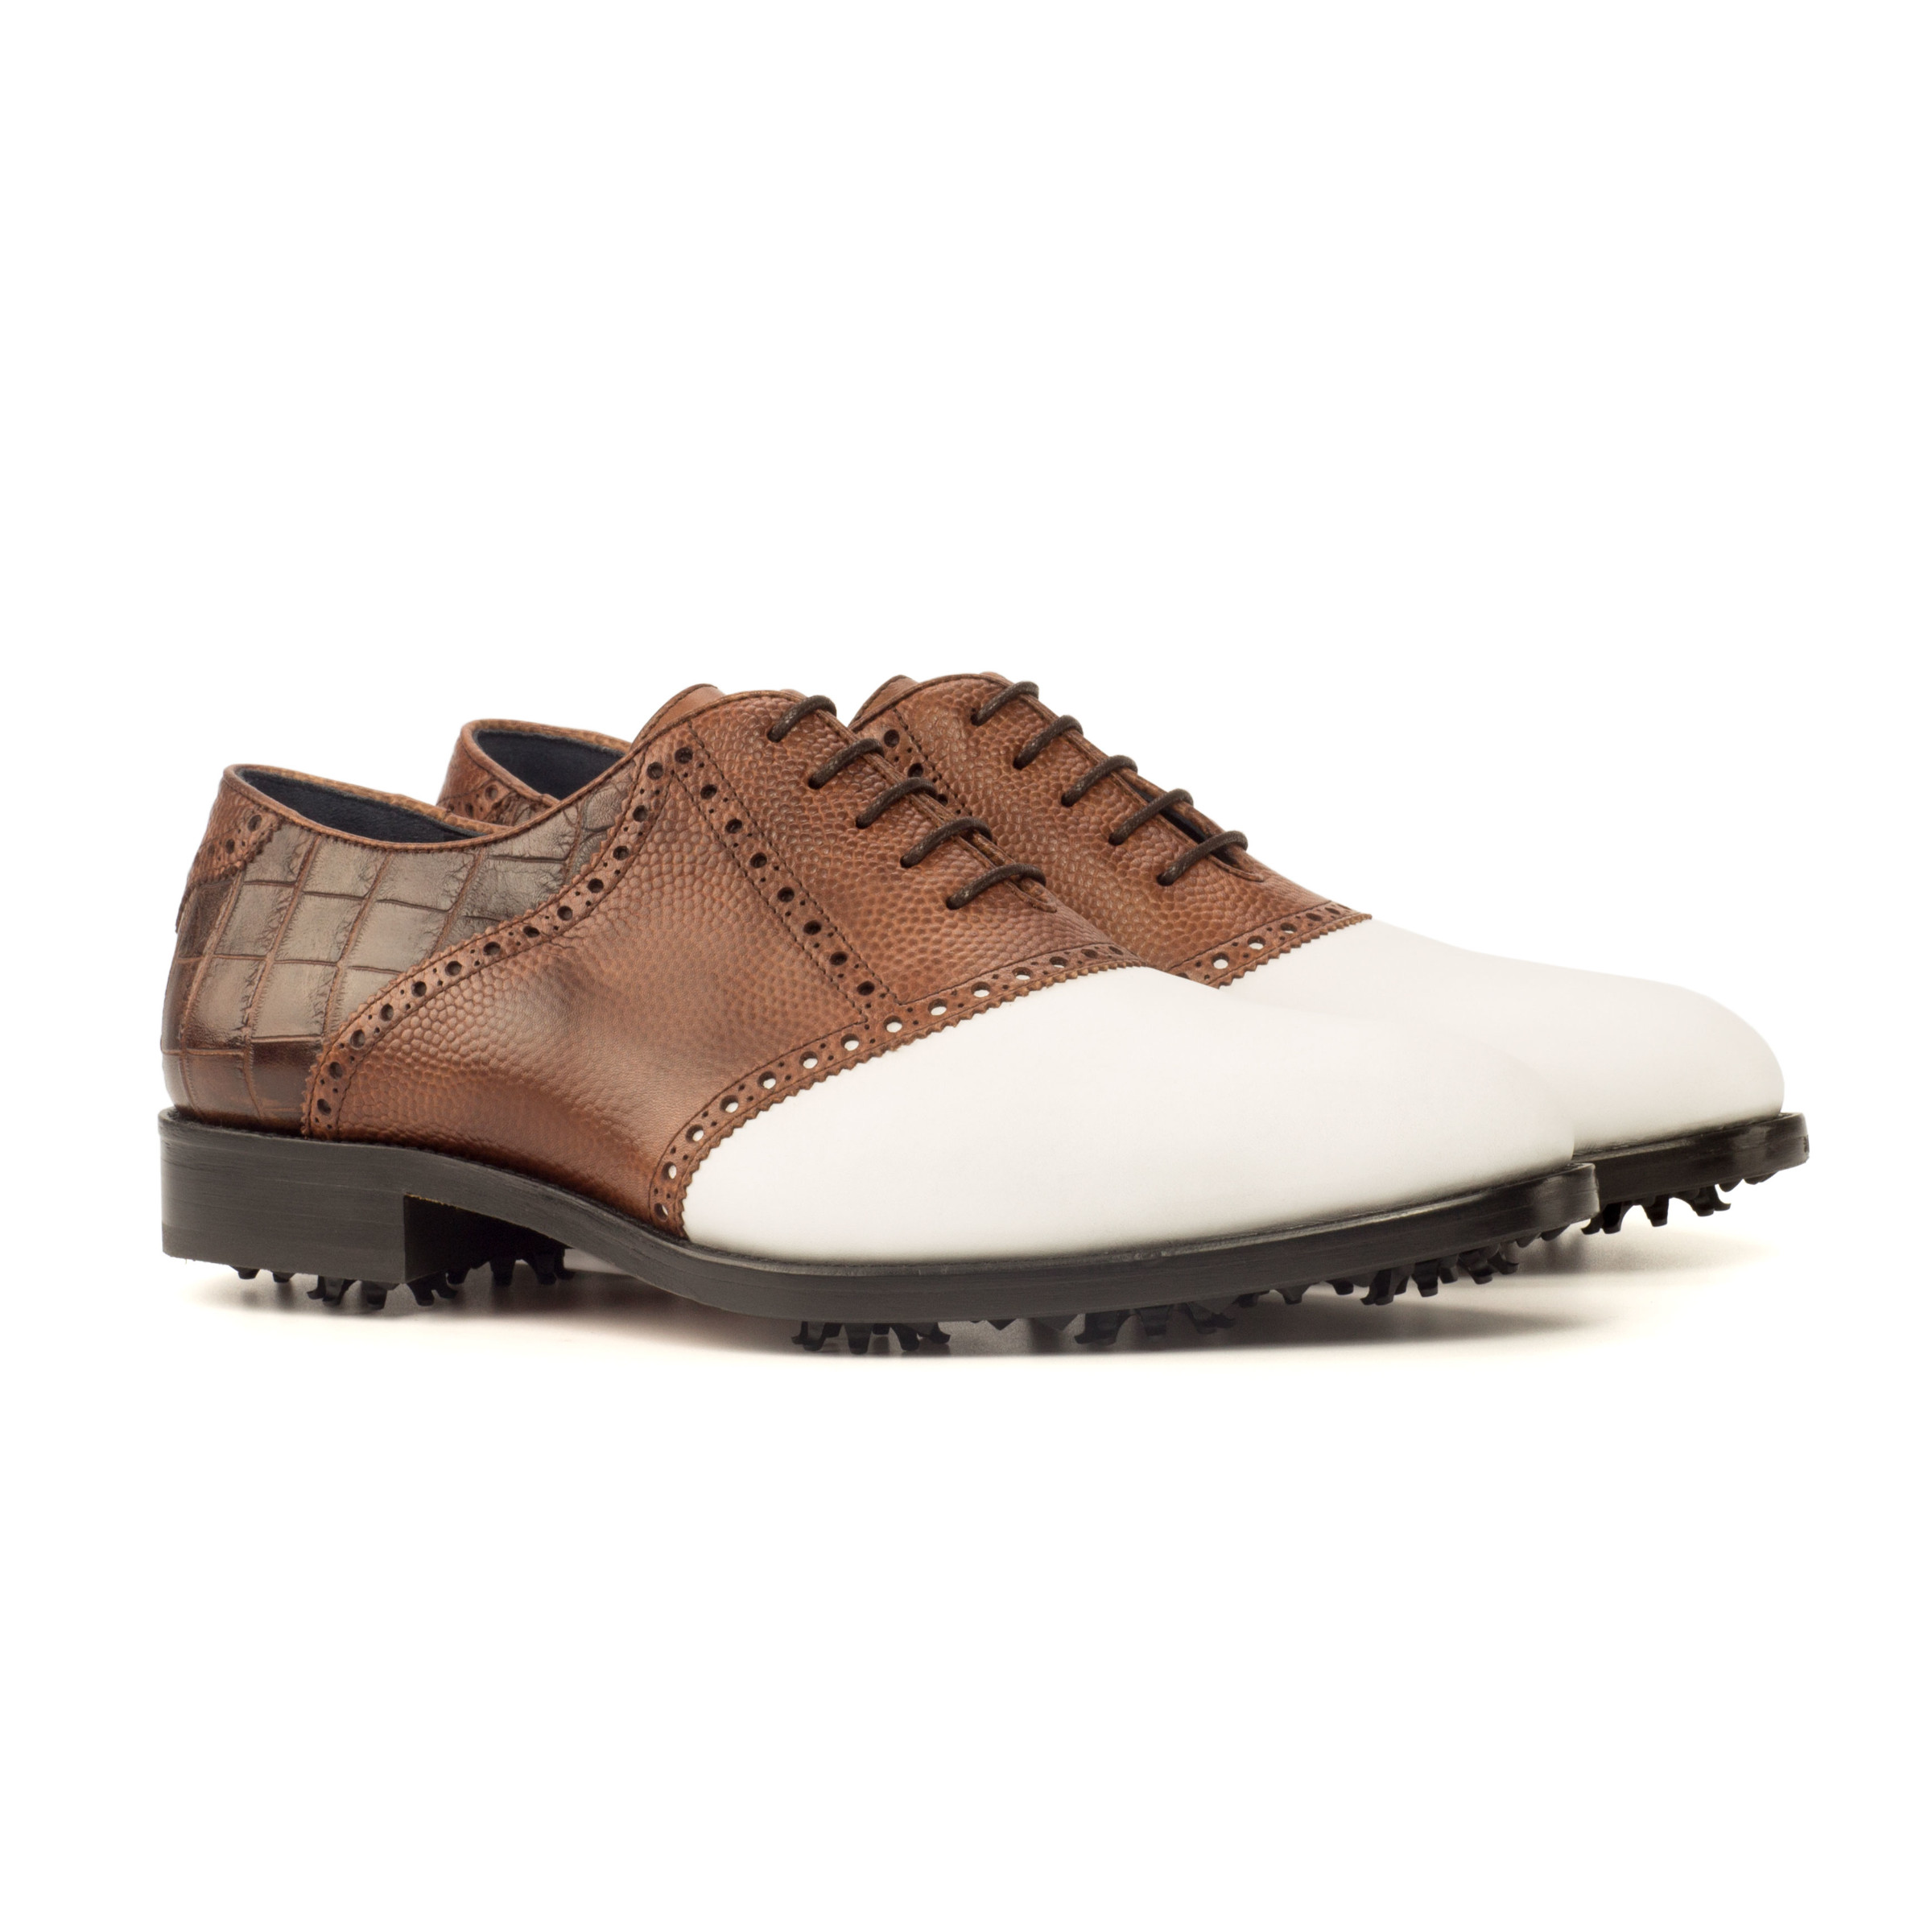 The Shetland Golf Shoe: Variant. Dark brown painted croco, white box calf, med brown painted calf, med brown pebble grain golf shoes